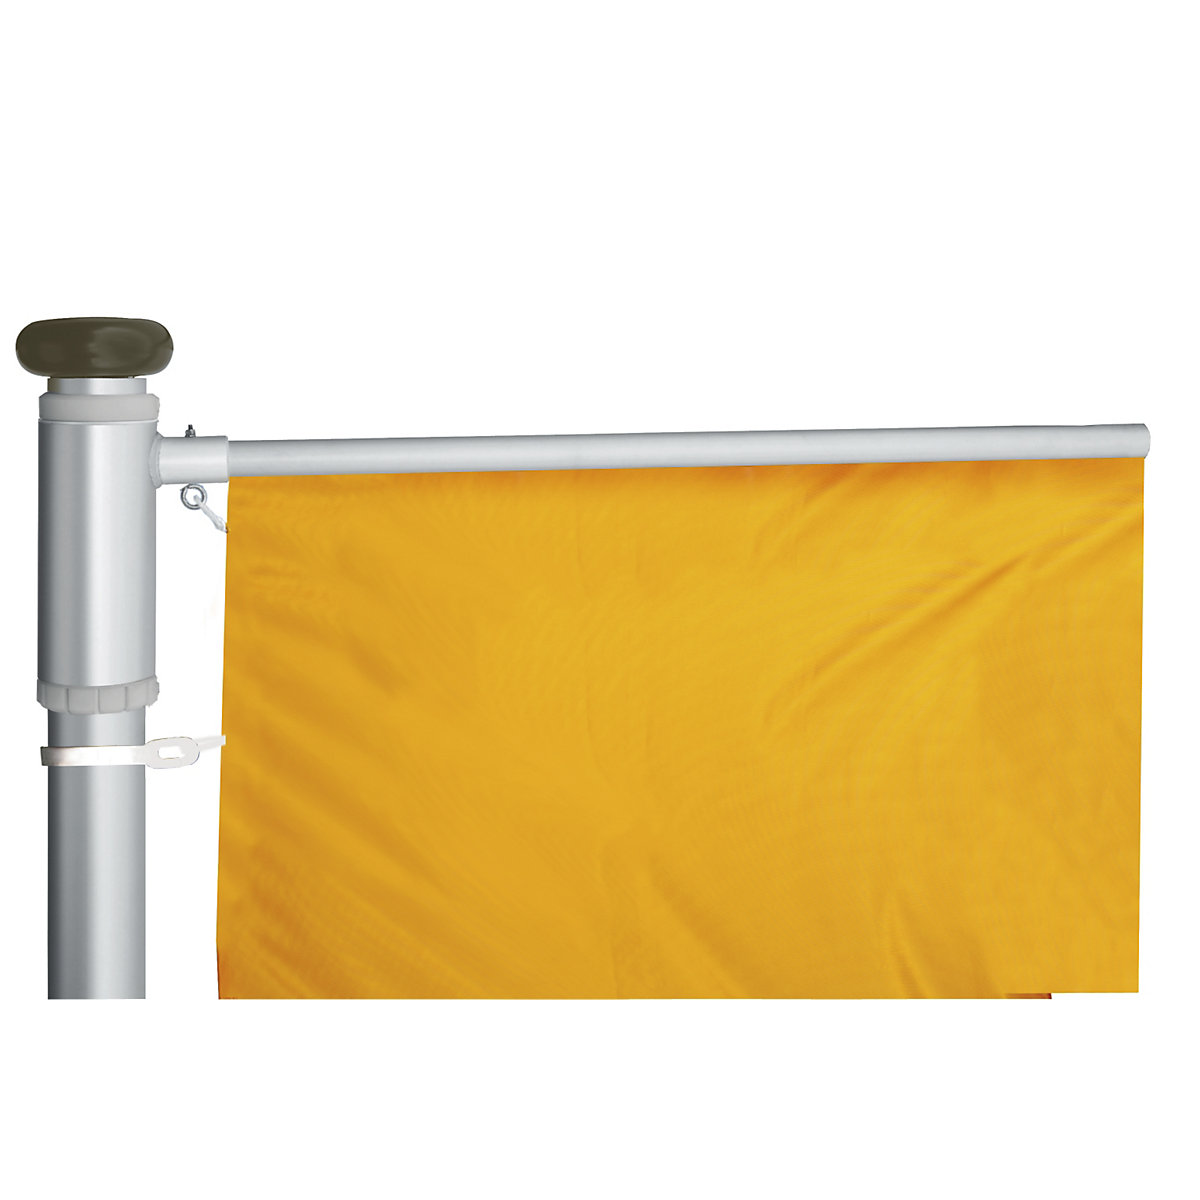 Aluminijast drog za zastavo PRESTIGE – Mannus (Slika izdelka 5)-4